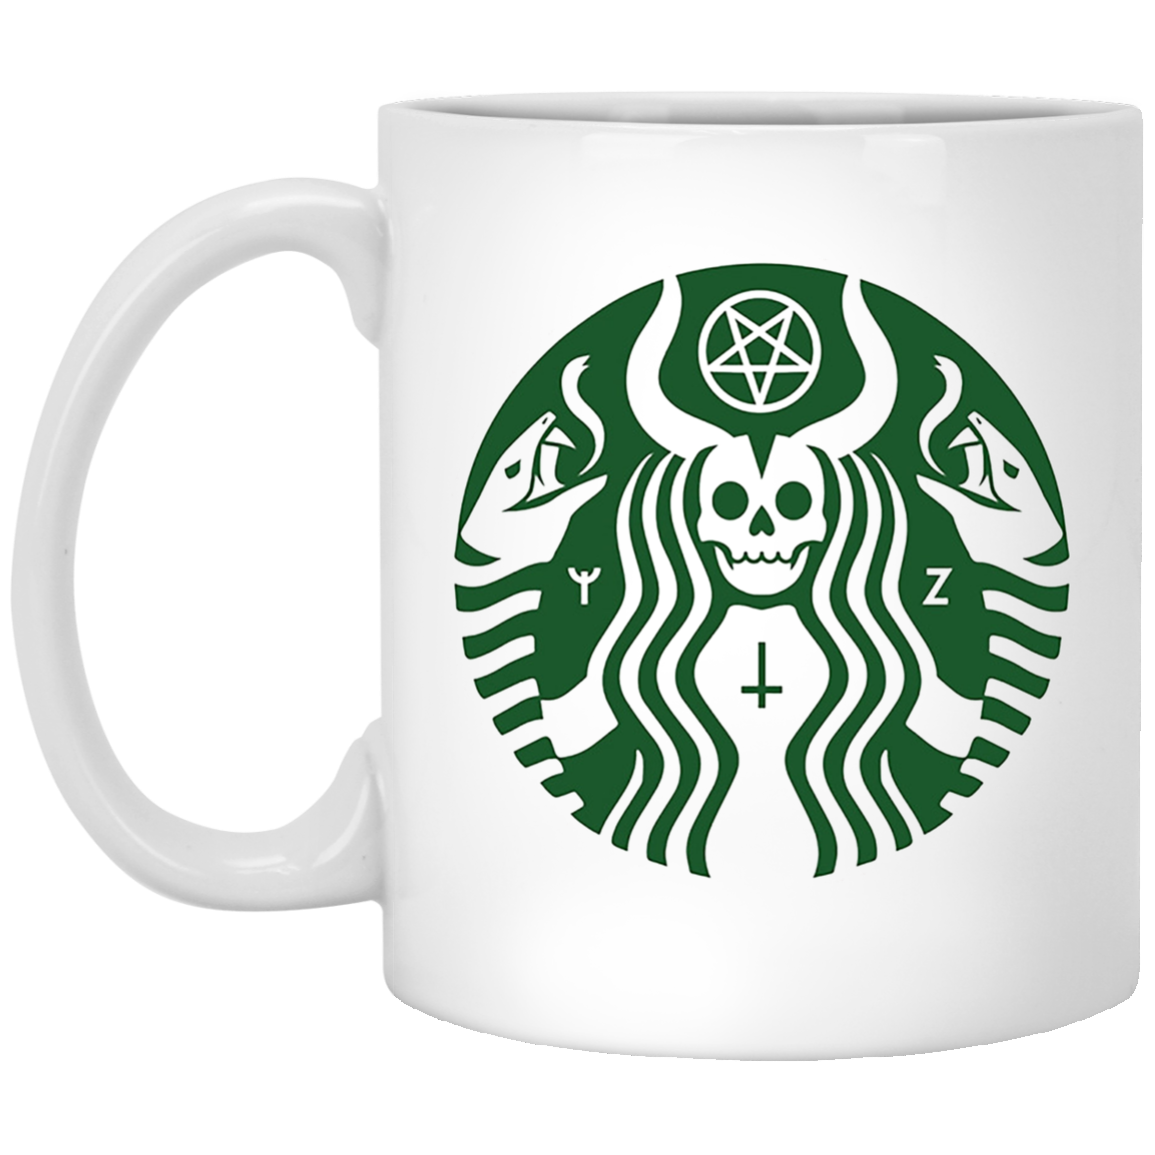 Coffee Brea Satan Starbucks Logo Cafe PNG Image